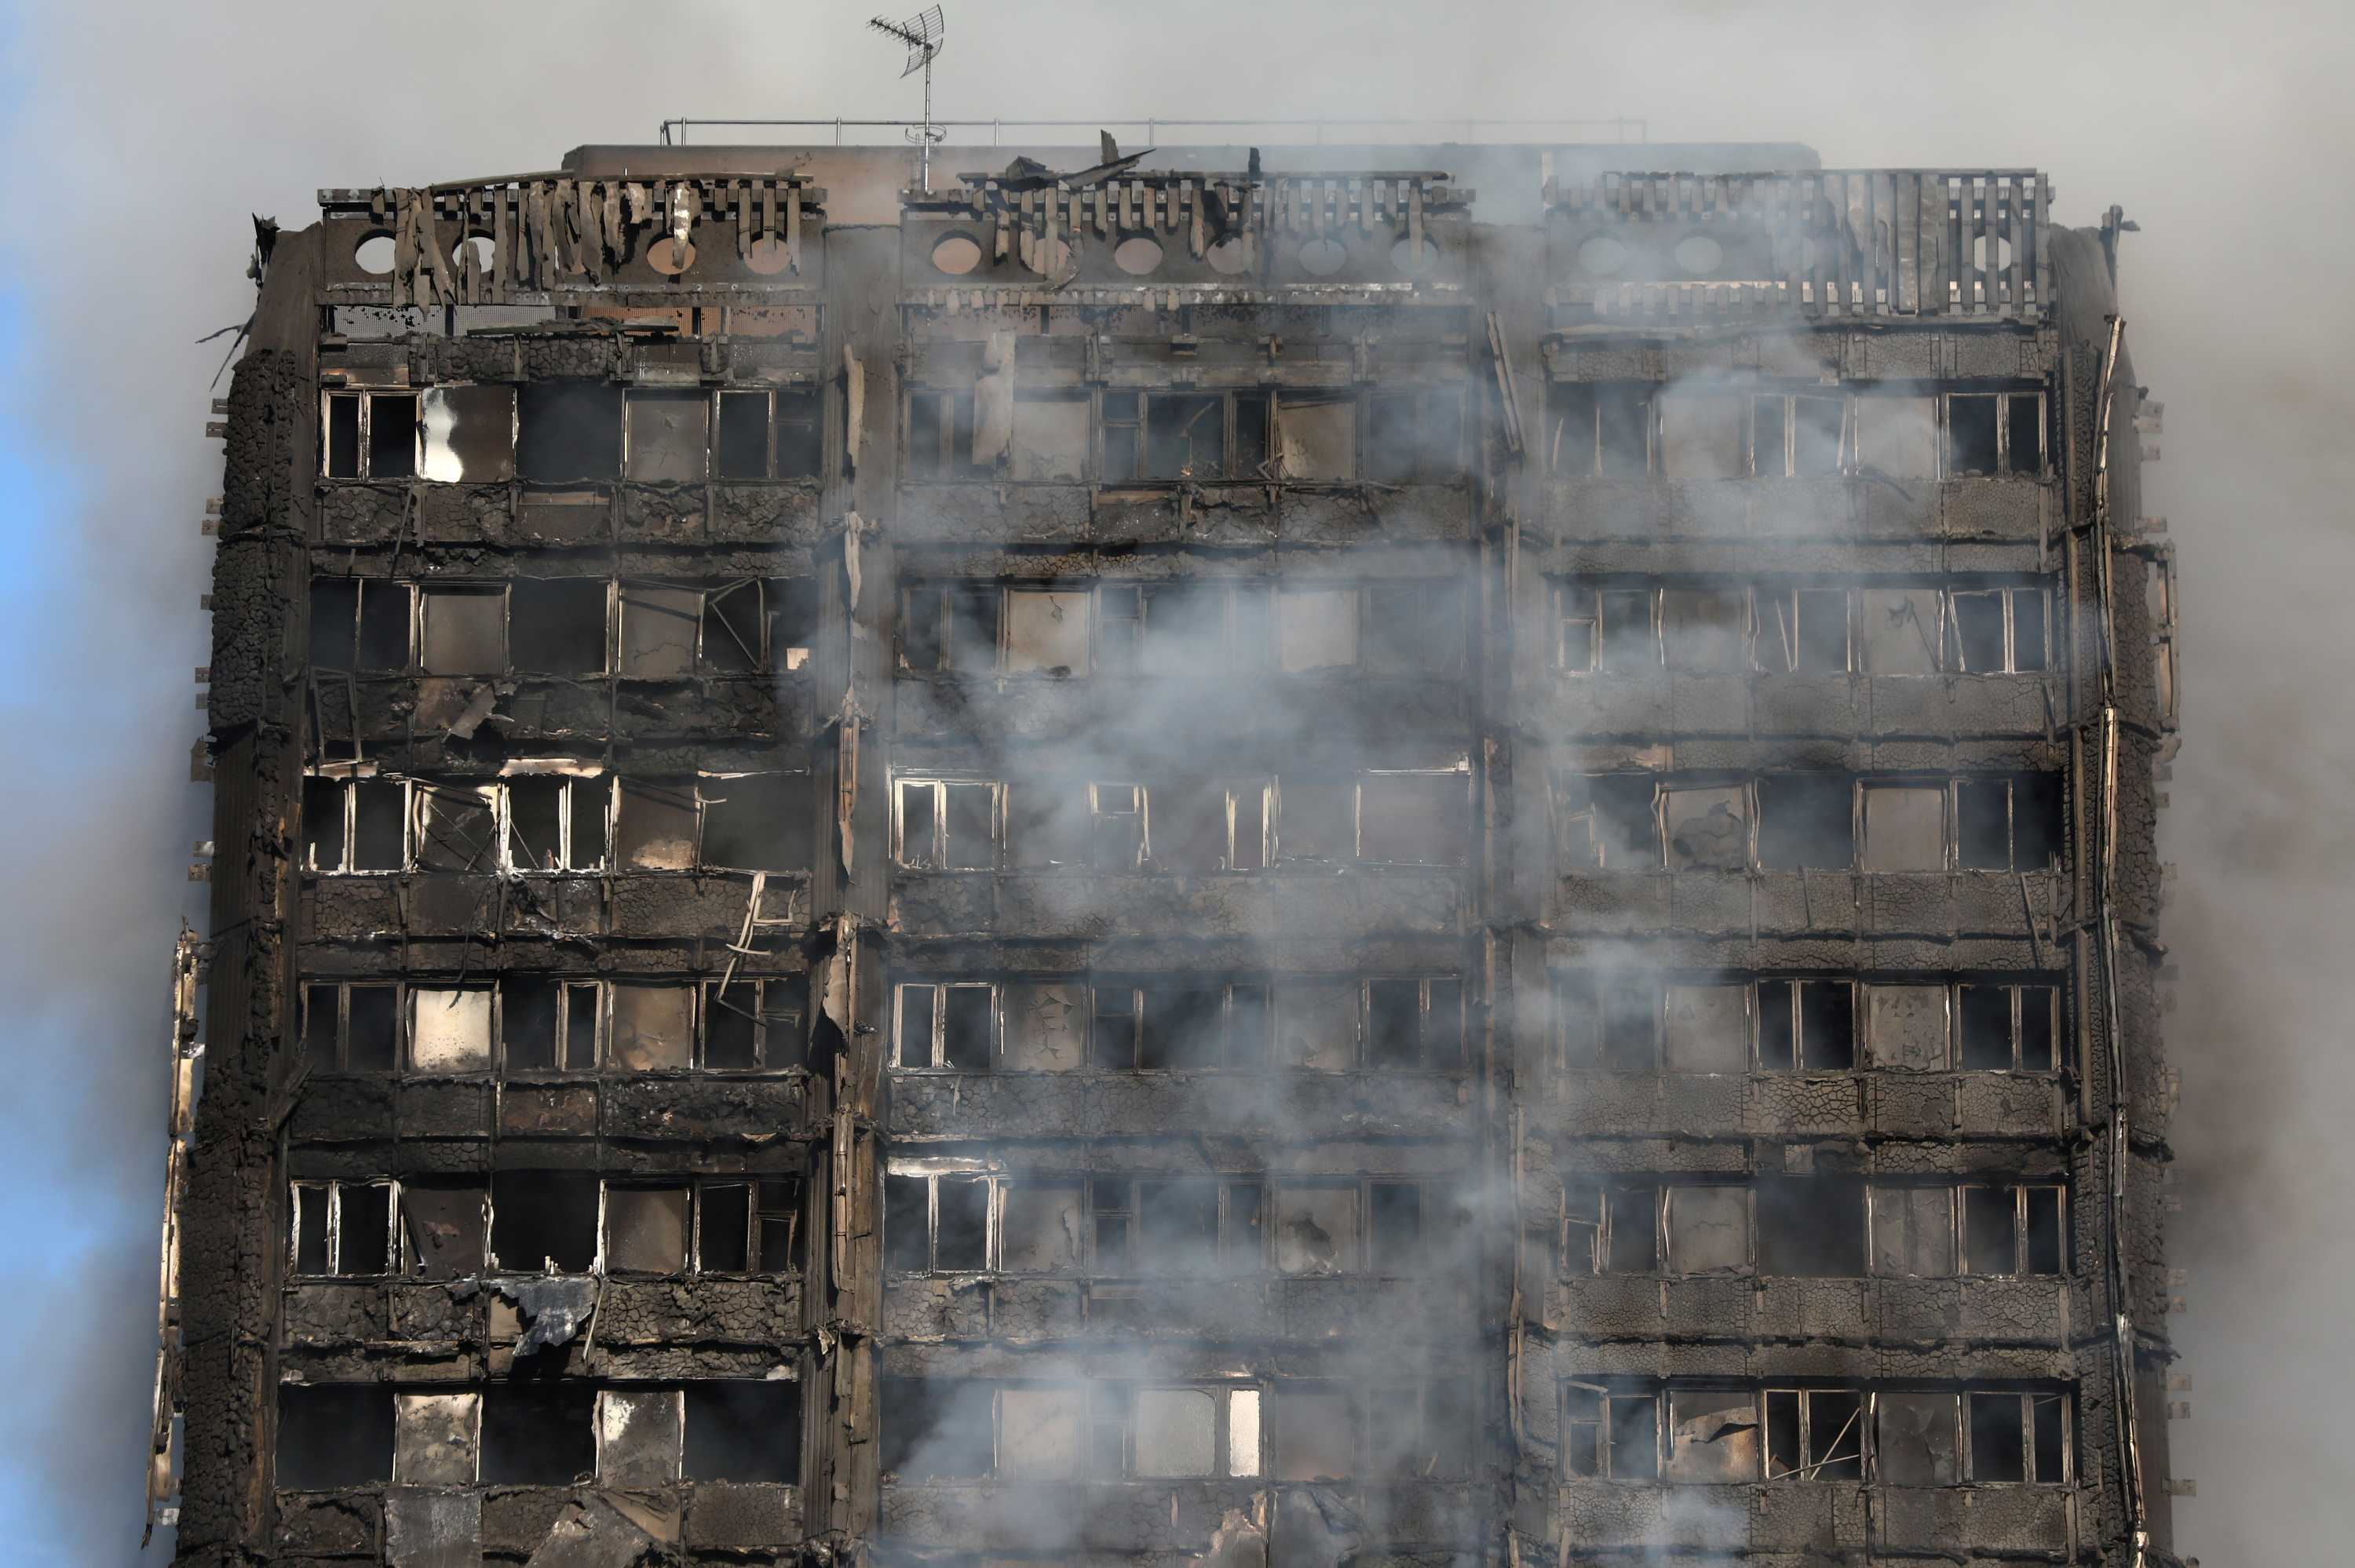 12 people died in building blaze